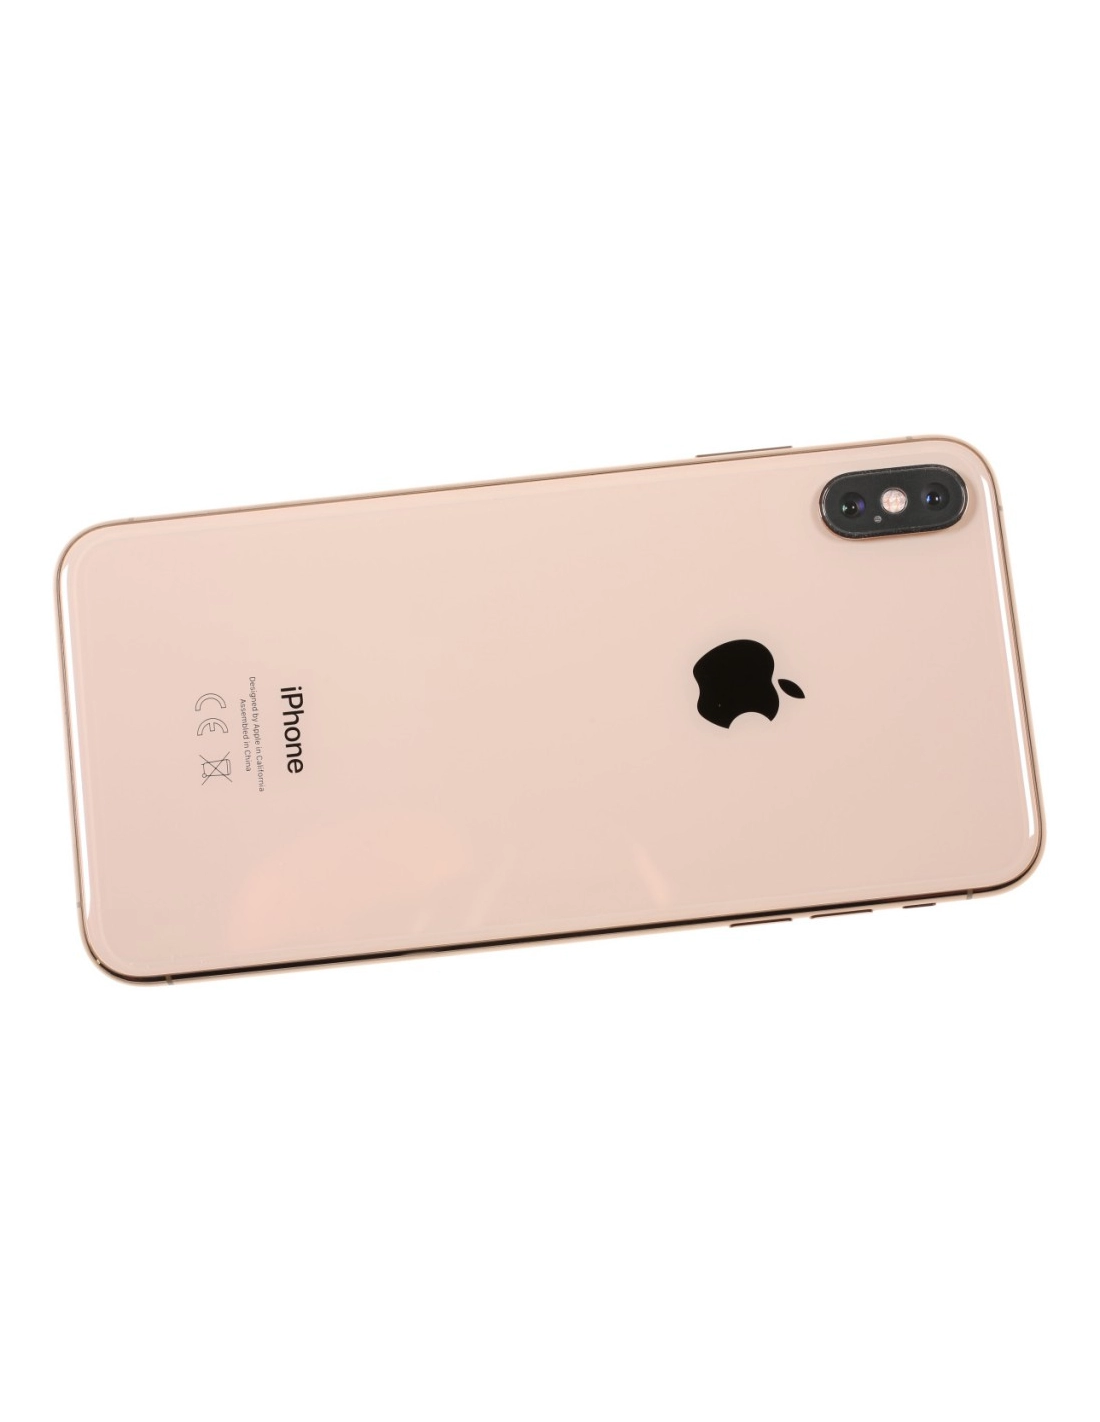 Apple Iphone Xs Max 256gb Gold Złoty